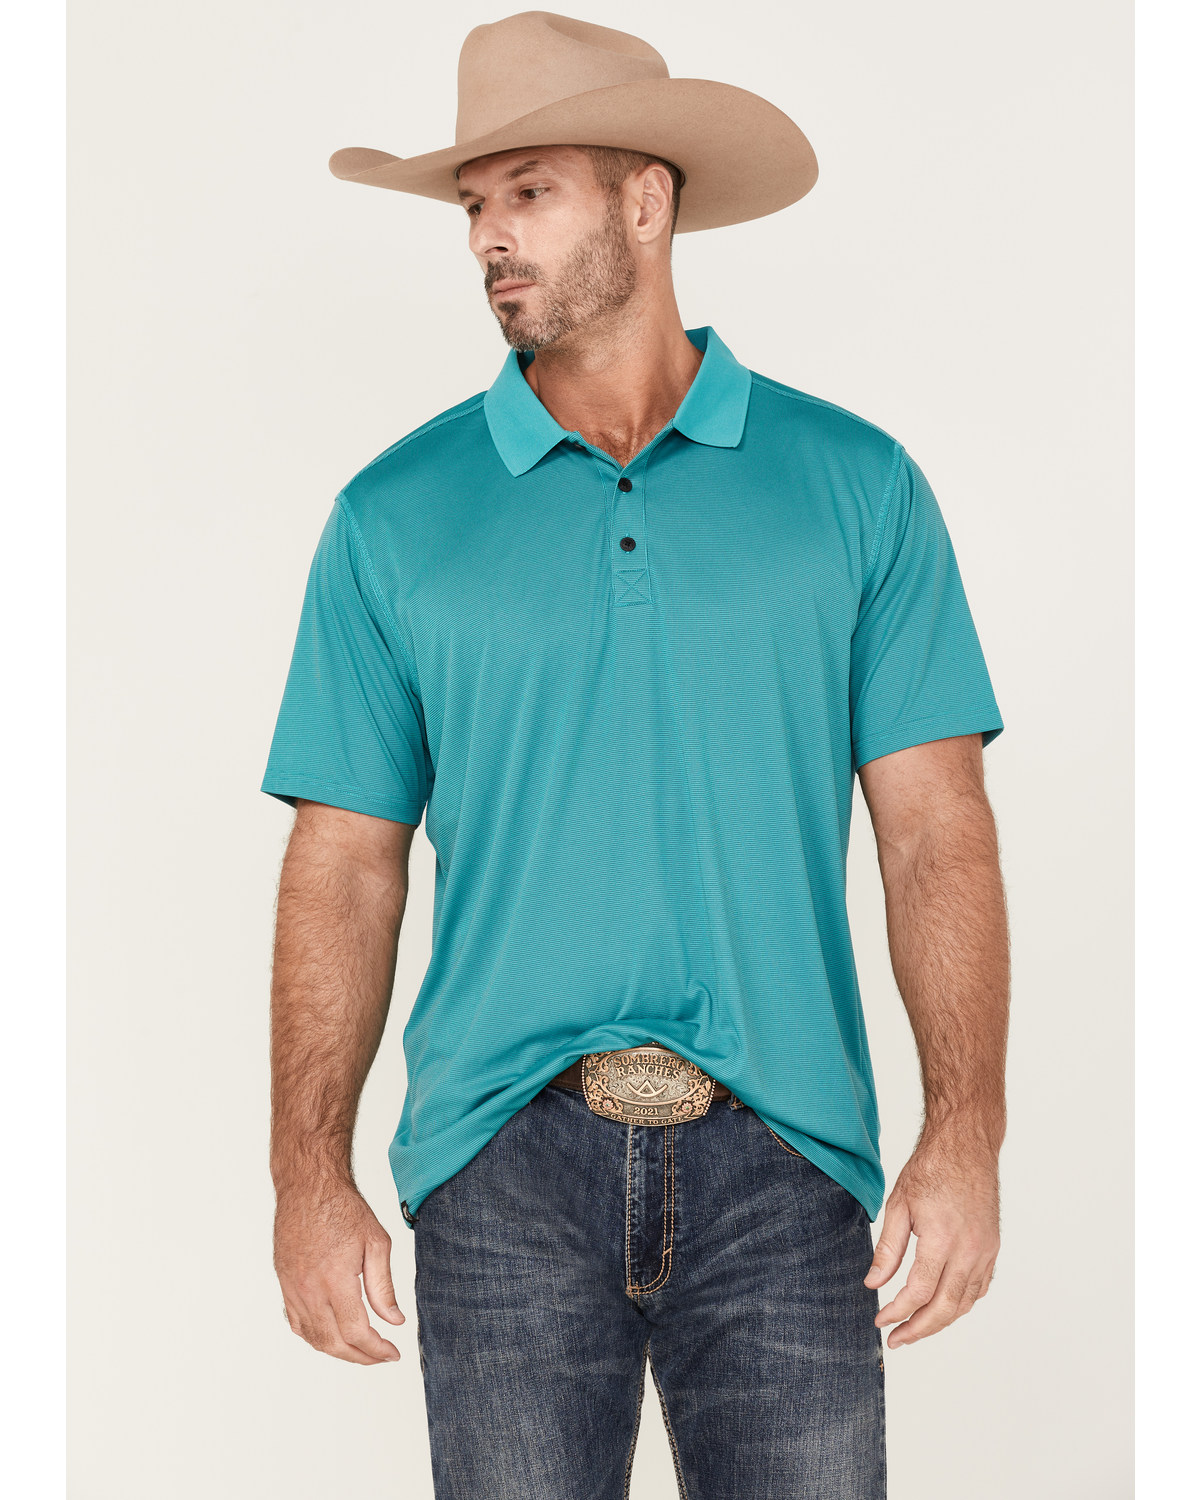 RANK 45® Men's Spinner Solid Short Sleeve Polo Shirt